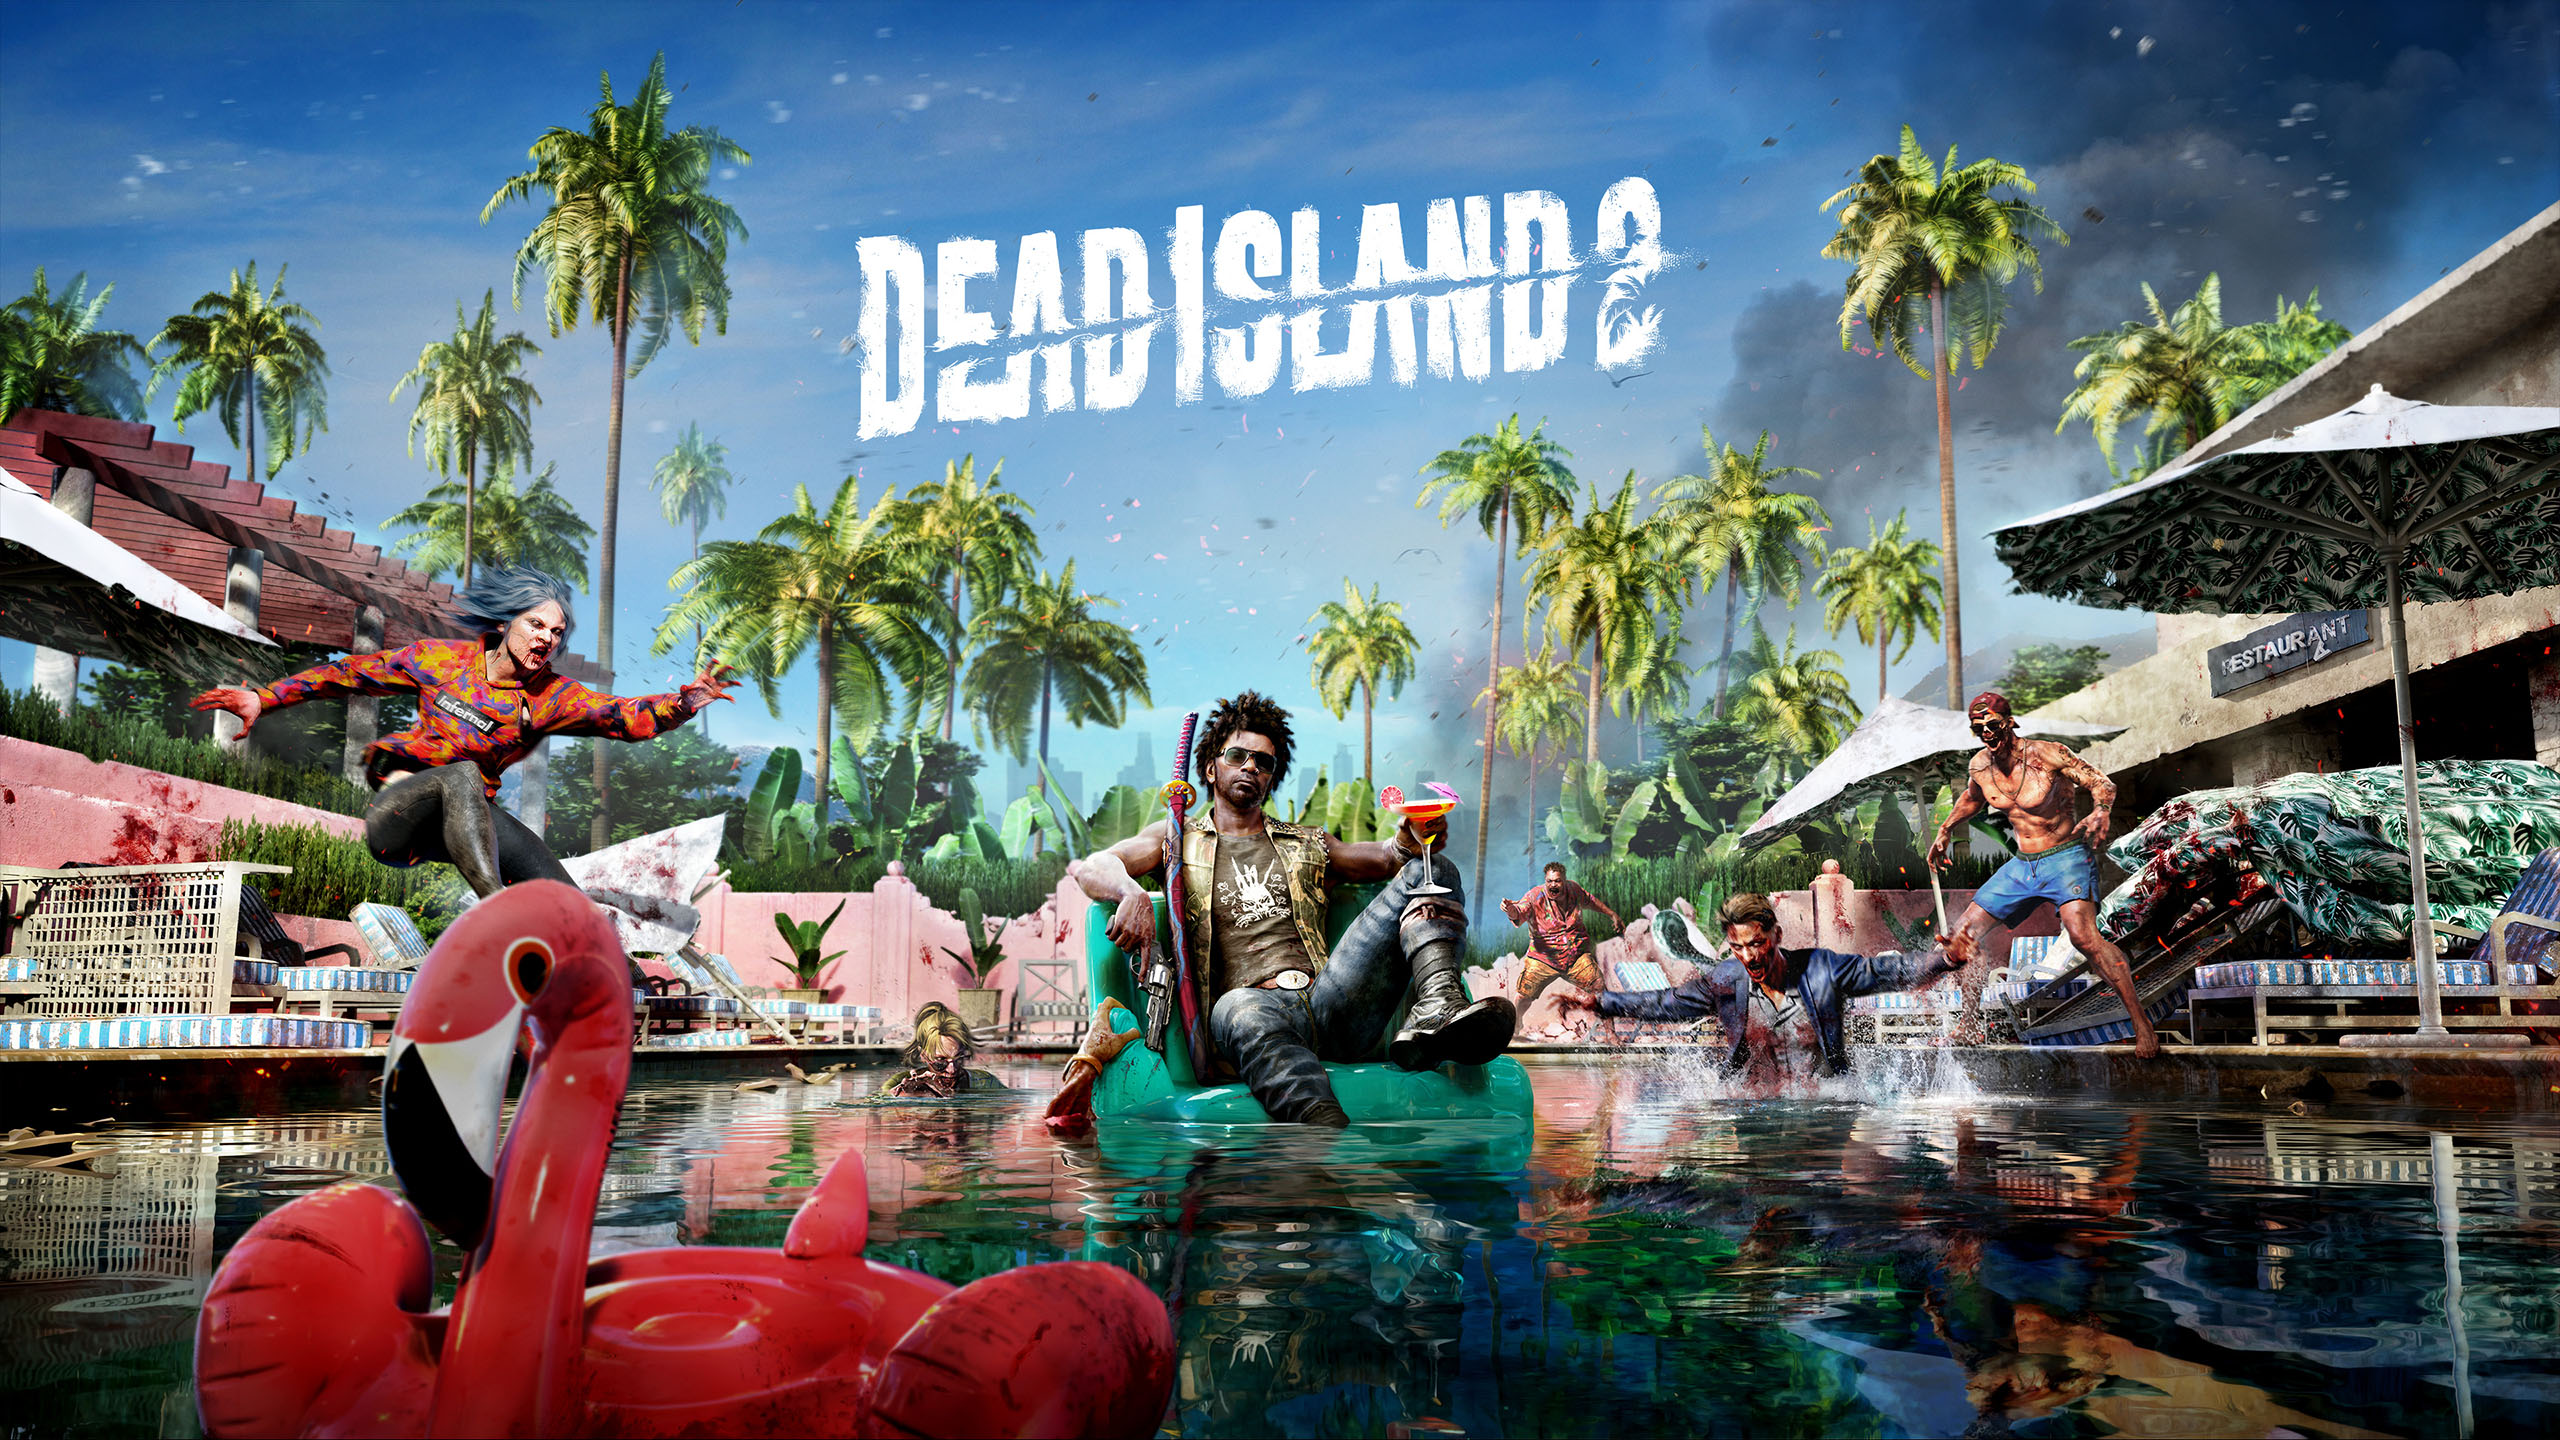 Dead Island 2 Haus — Cul De Sac 